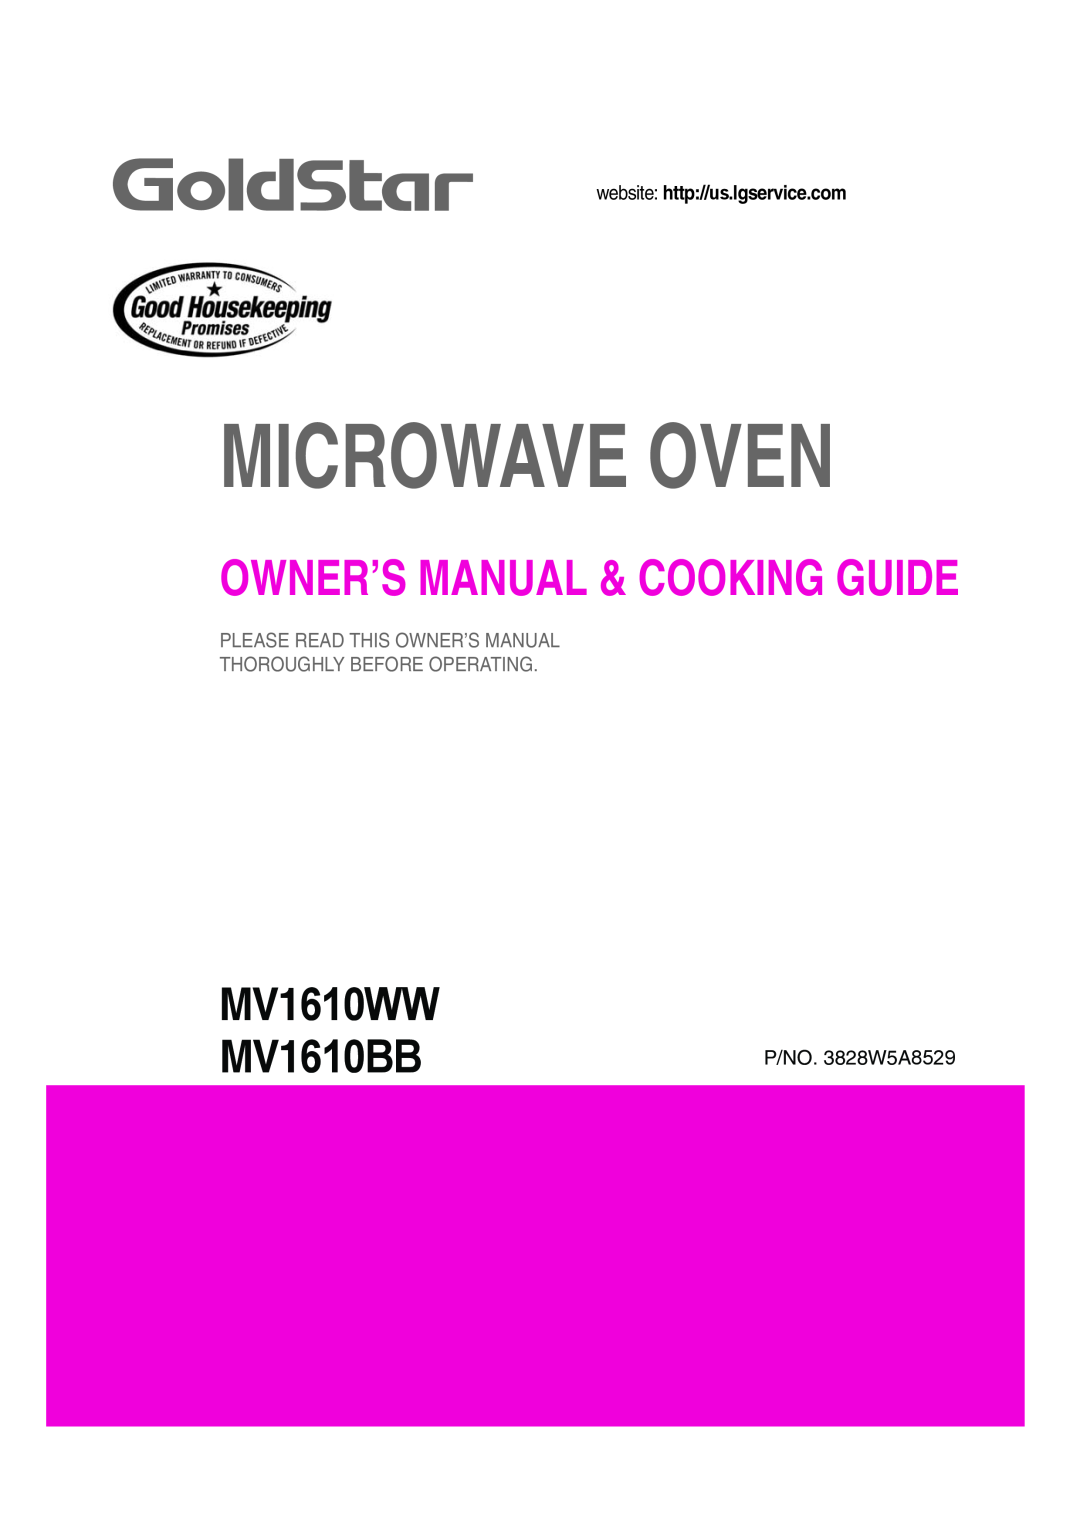 Goldstar MV1610WW owner manual Microwave Oven, MV1610BB, website http//us.lgservice.com, P/NO. 3828W5A 